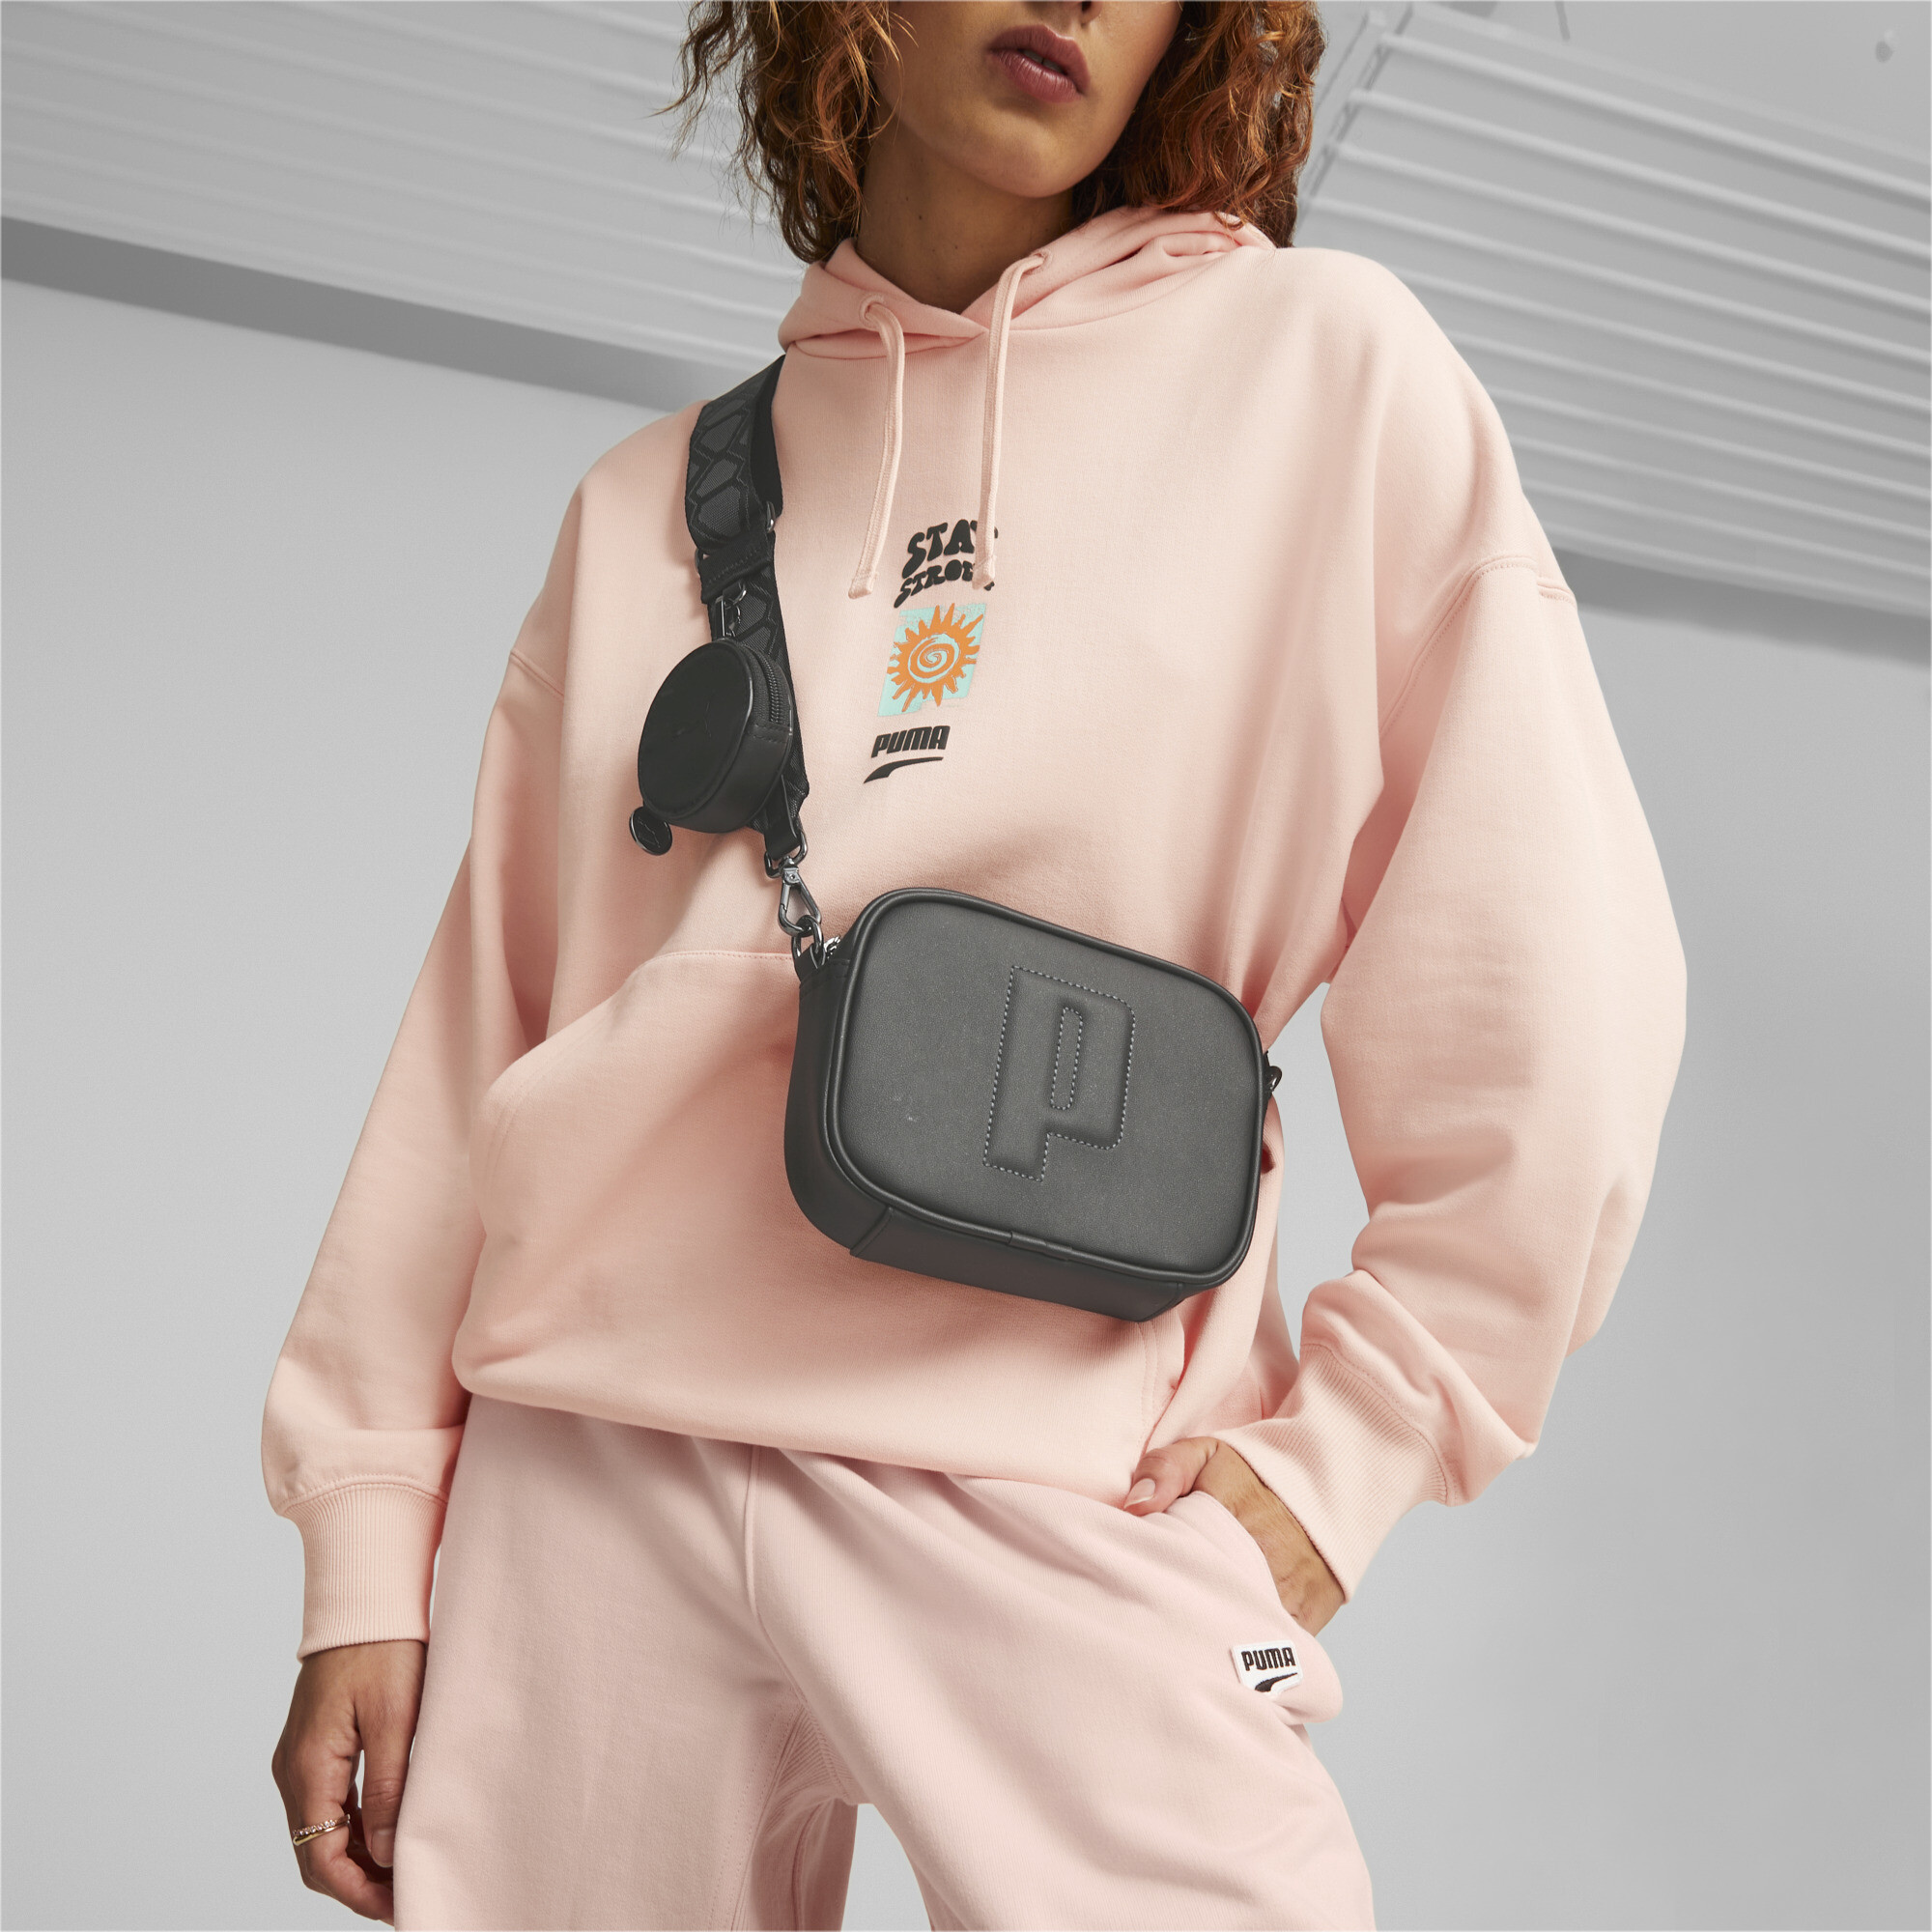 Women's Puma Sense Cross Body Bag, Black, Accessories